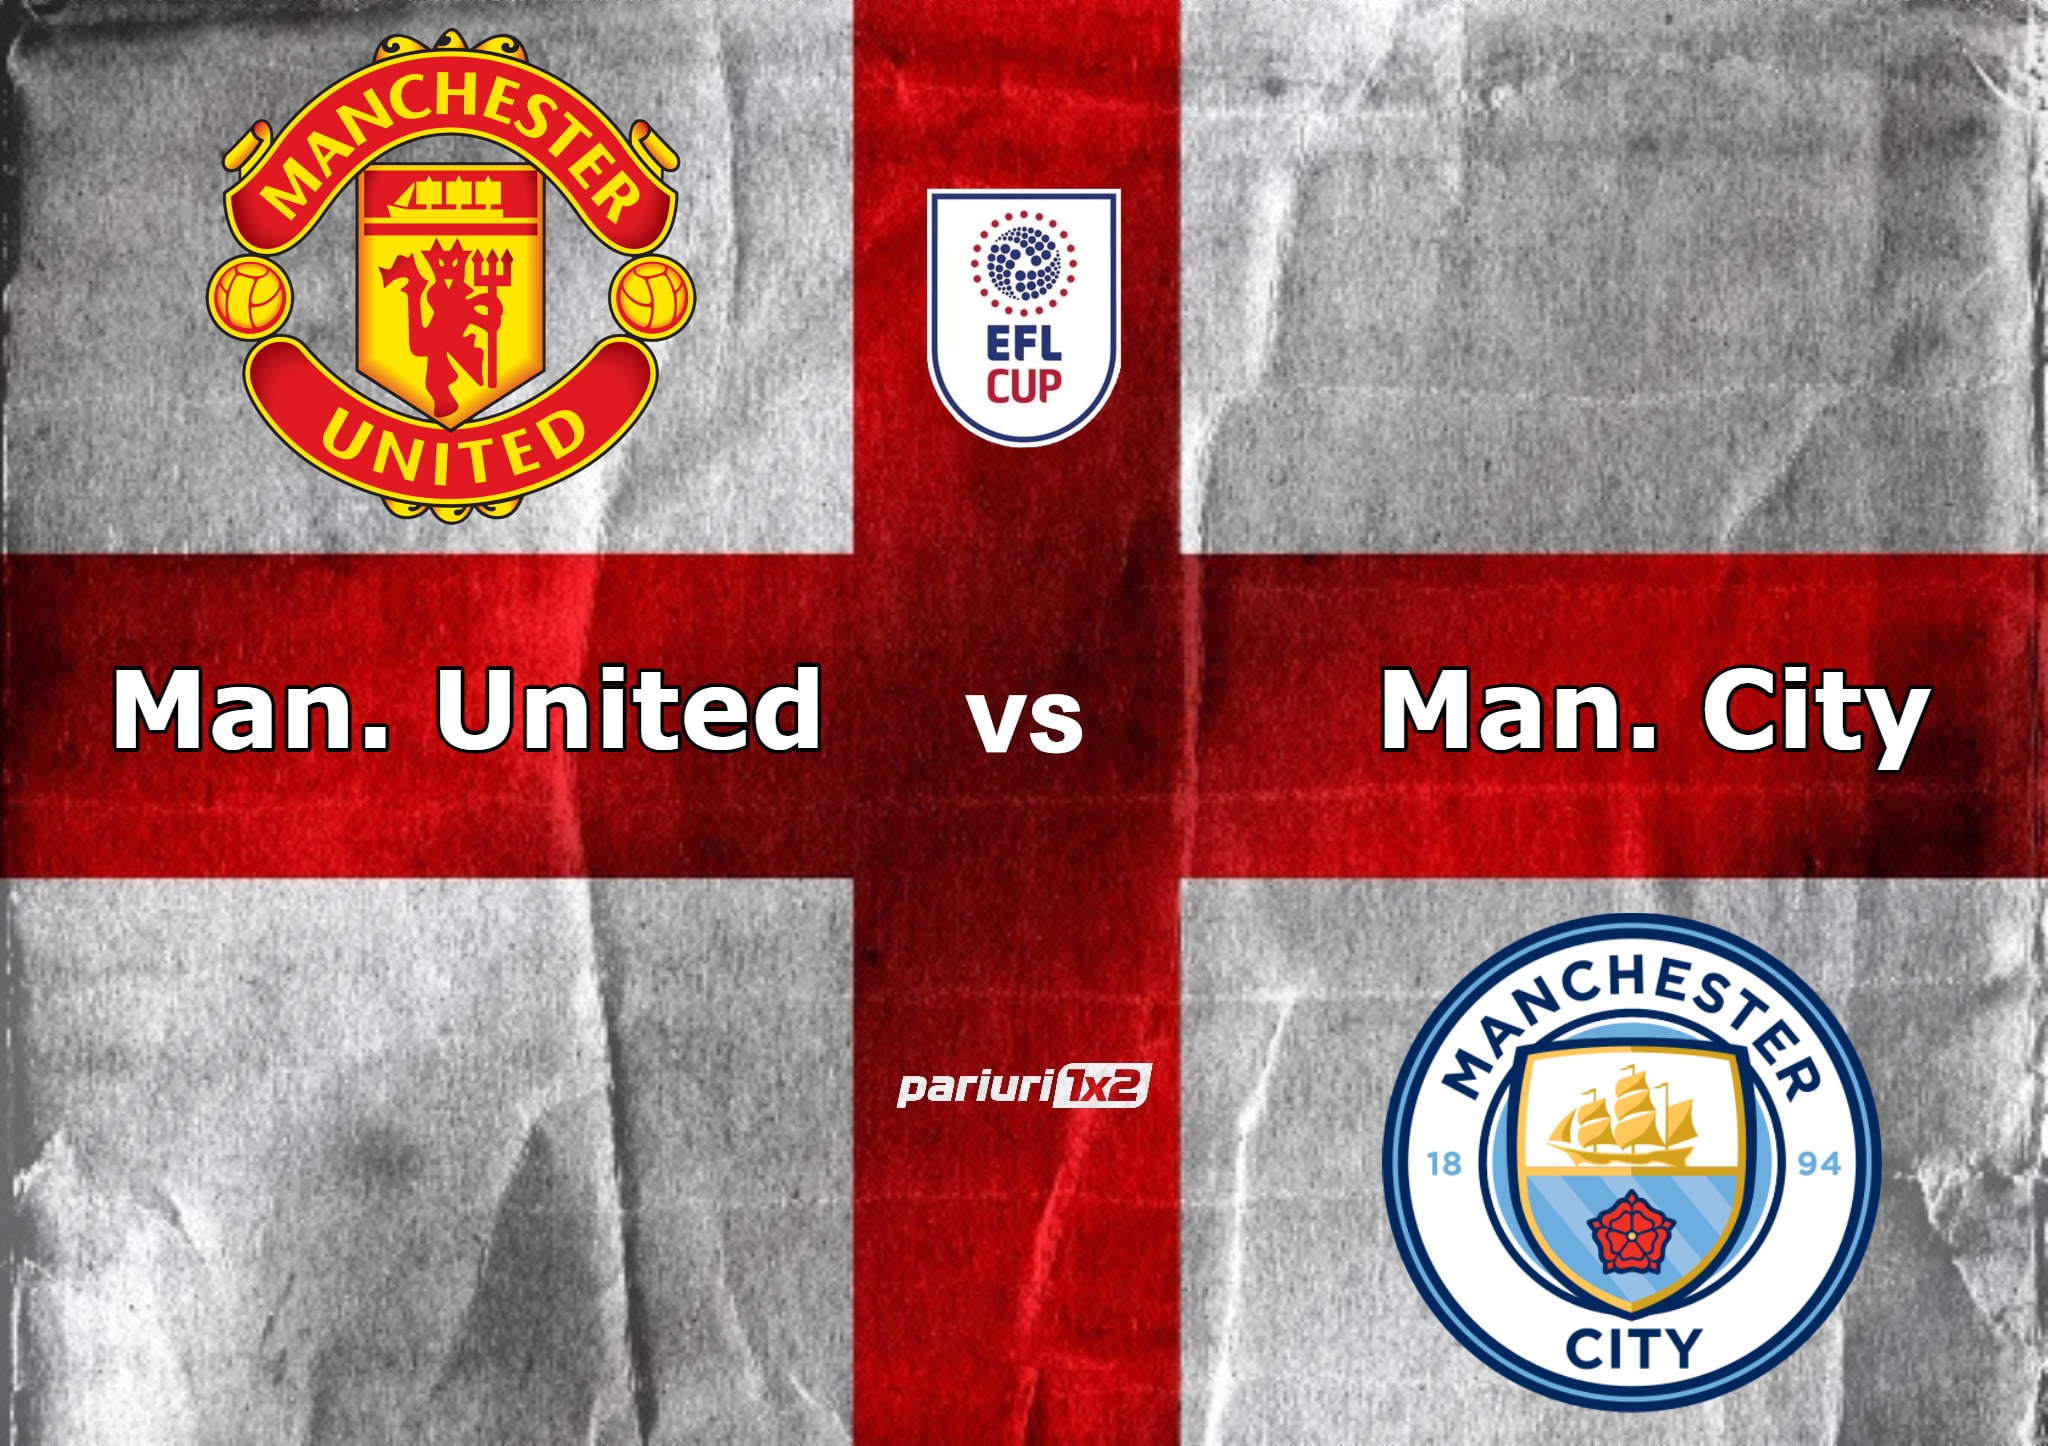 Man. United - Man. City